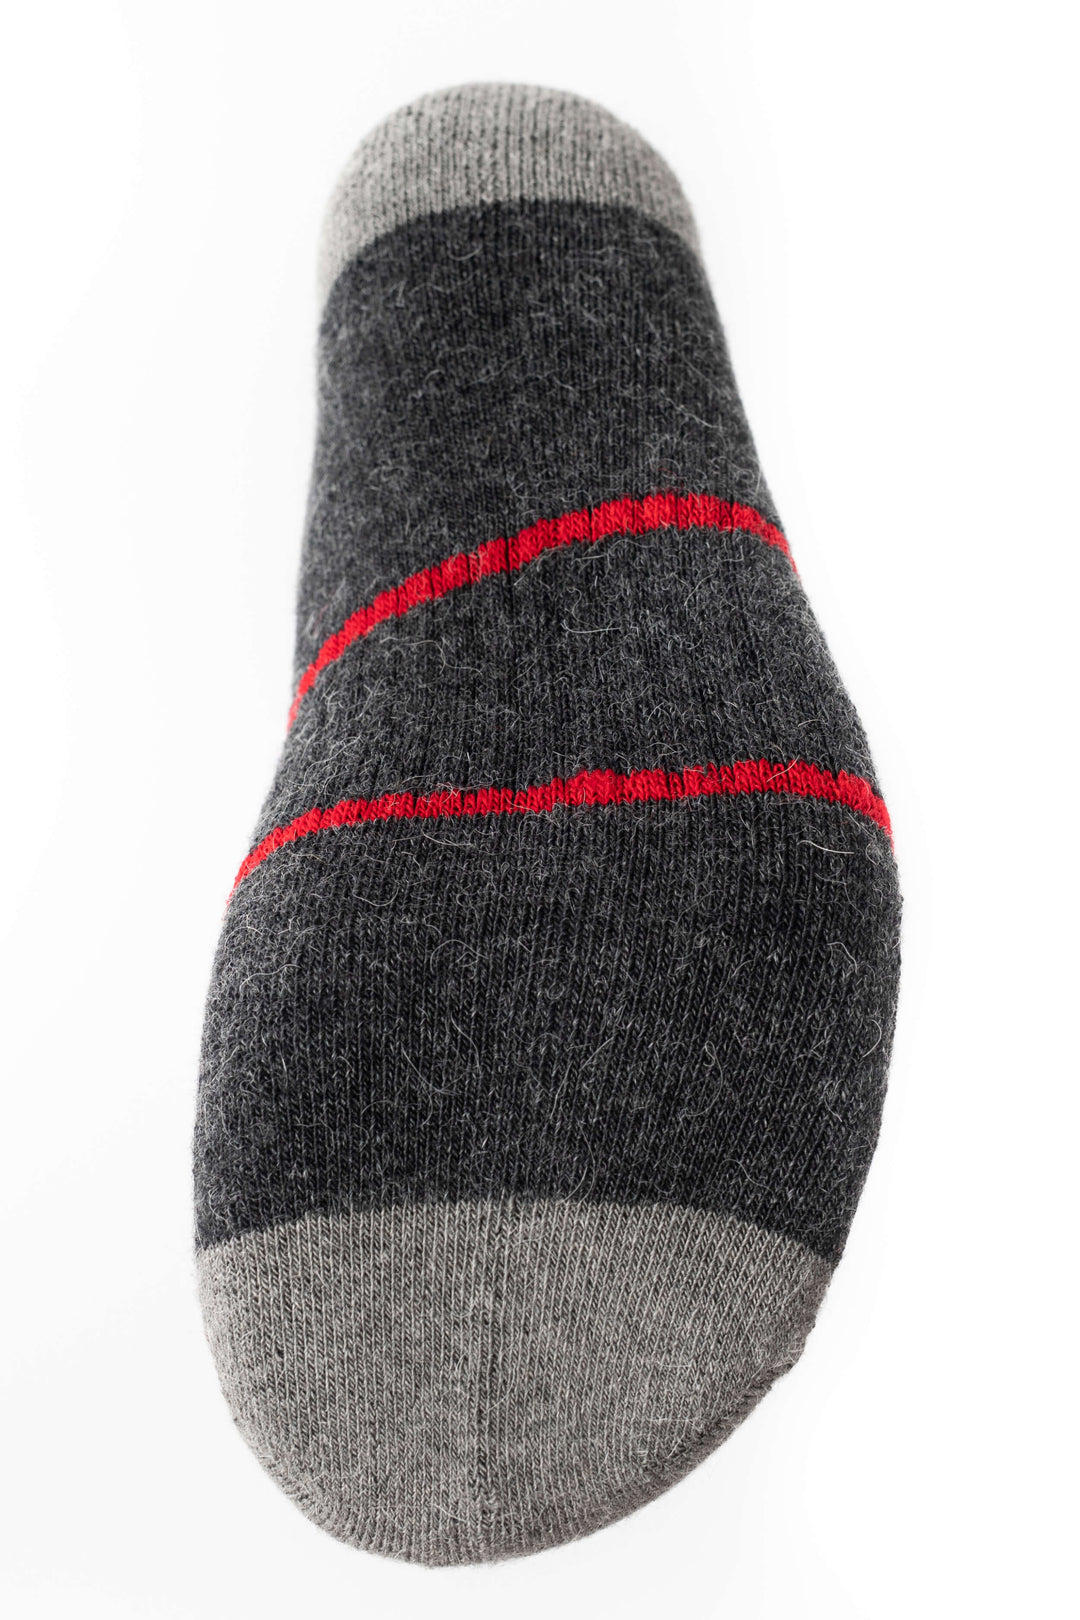 Nada Llama Crew Socks - Alpaca Socks Bottom - Woodroad Gear Co.